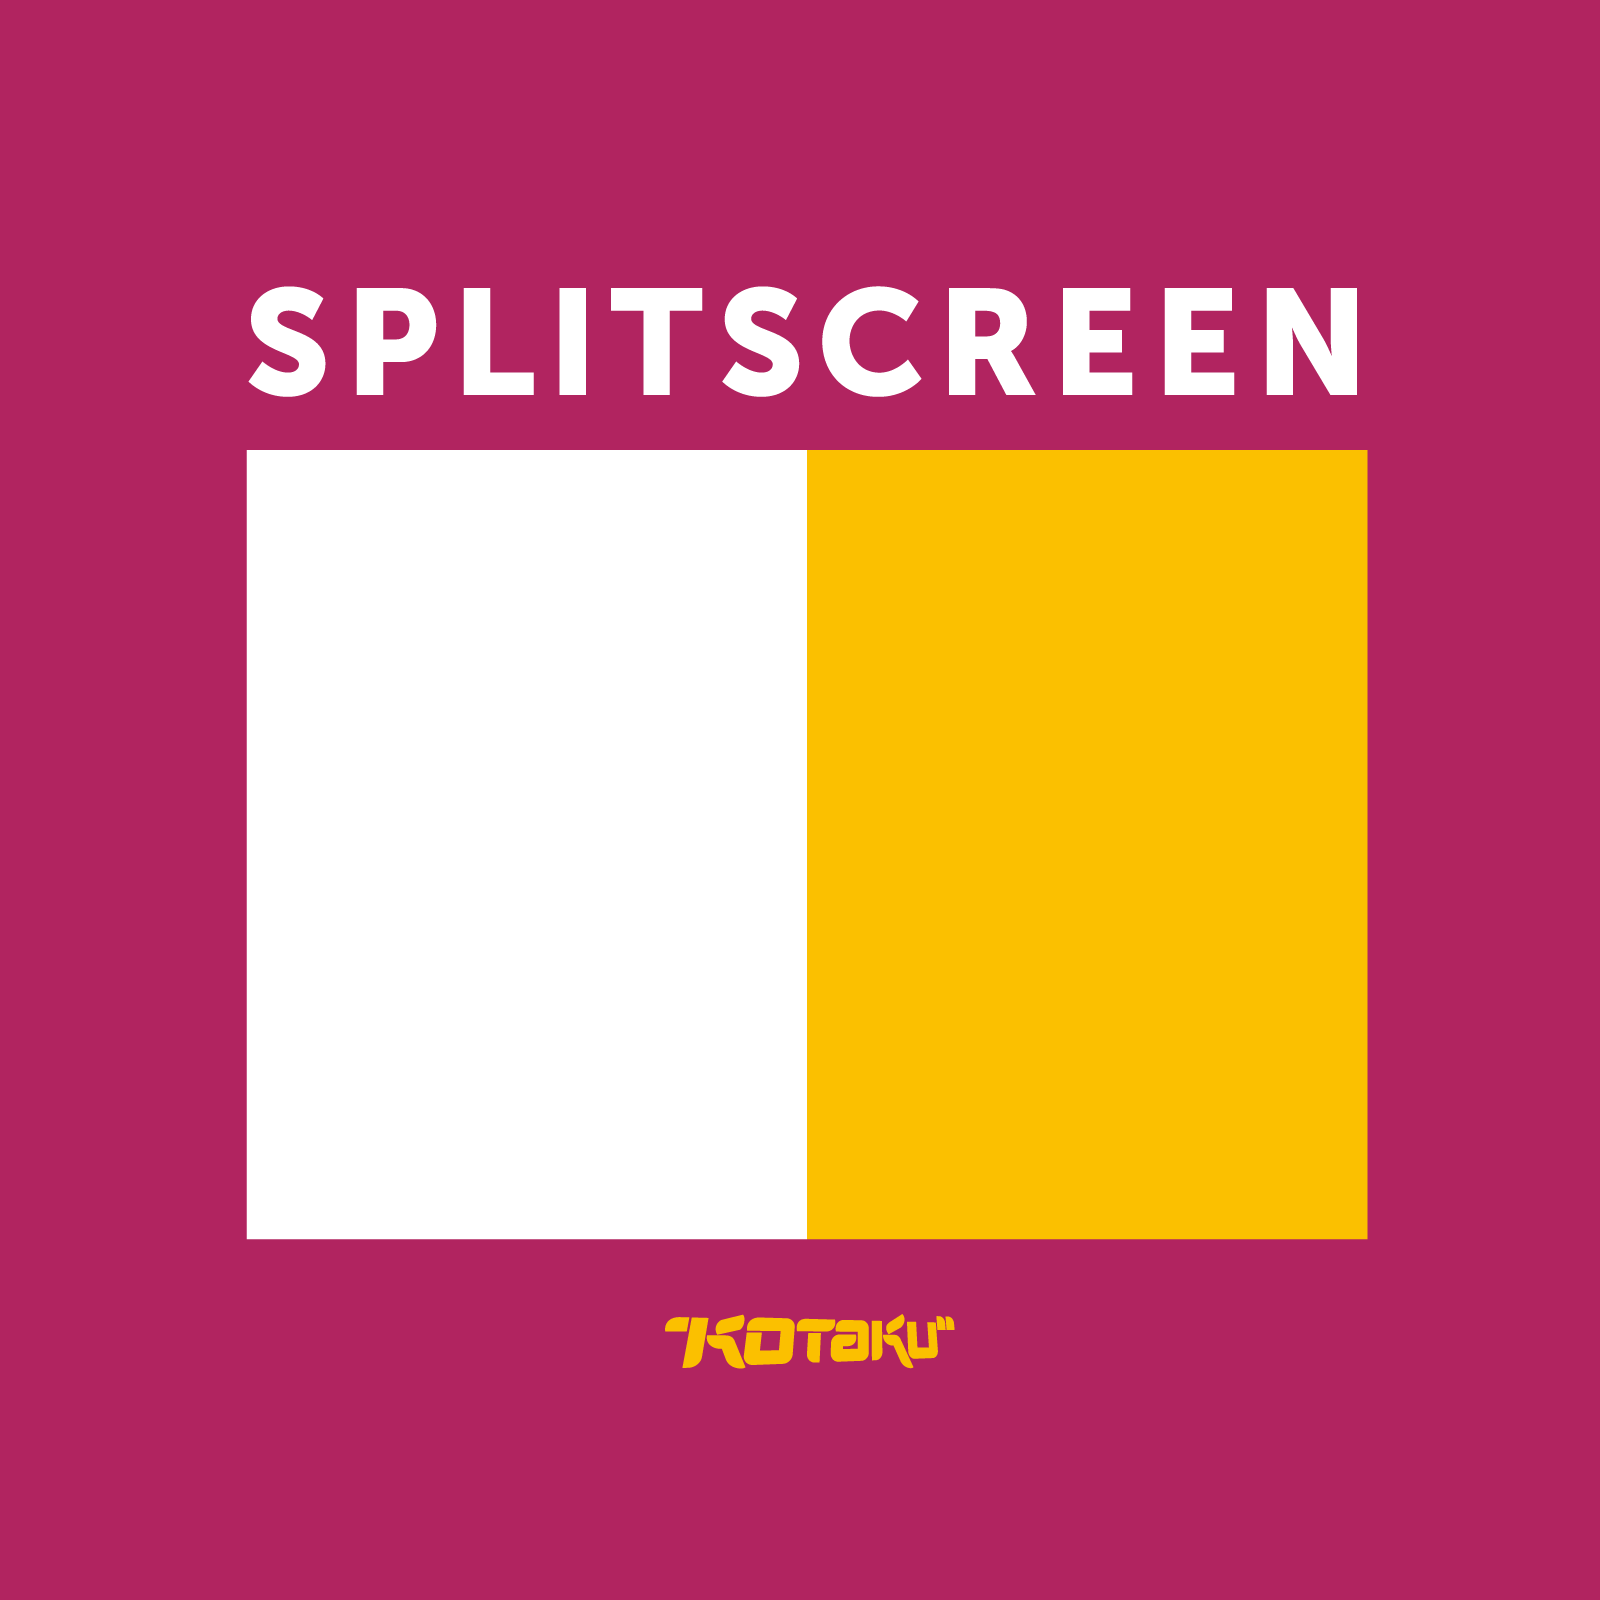 splitscreen_2020_sketches_6.png